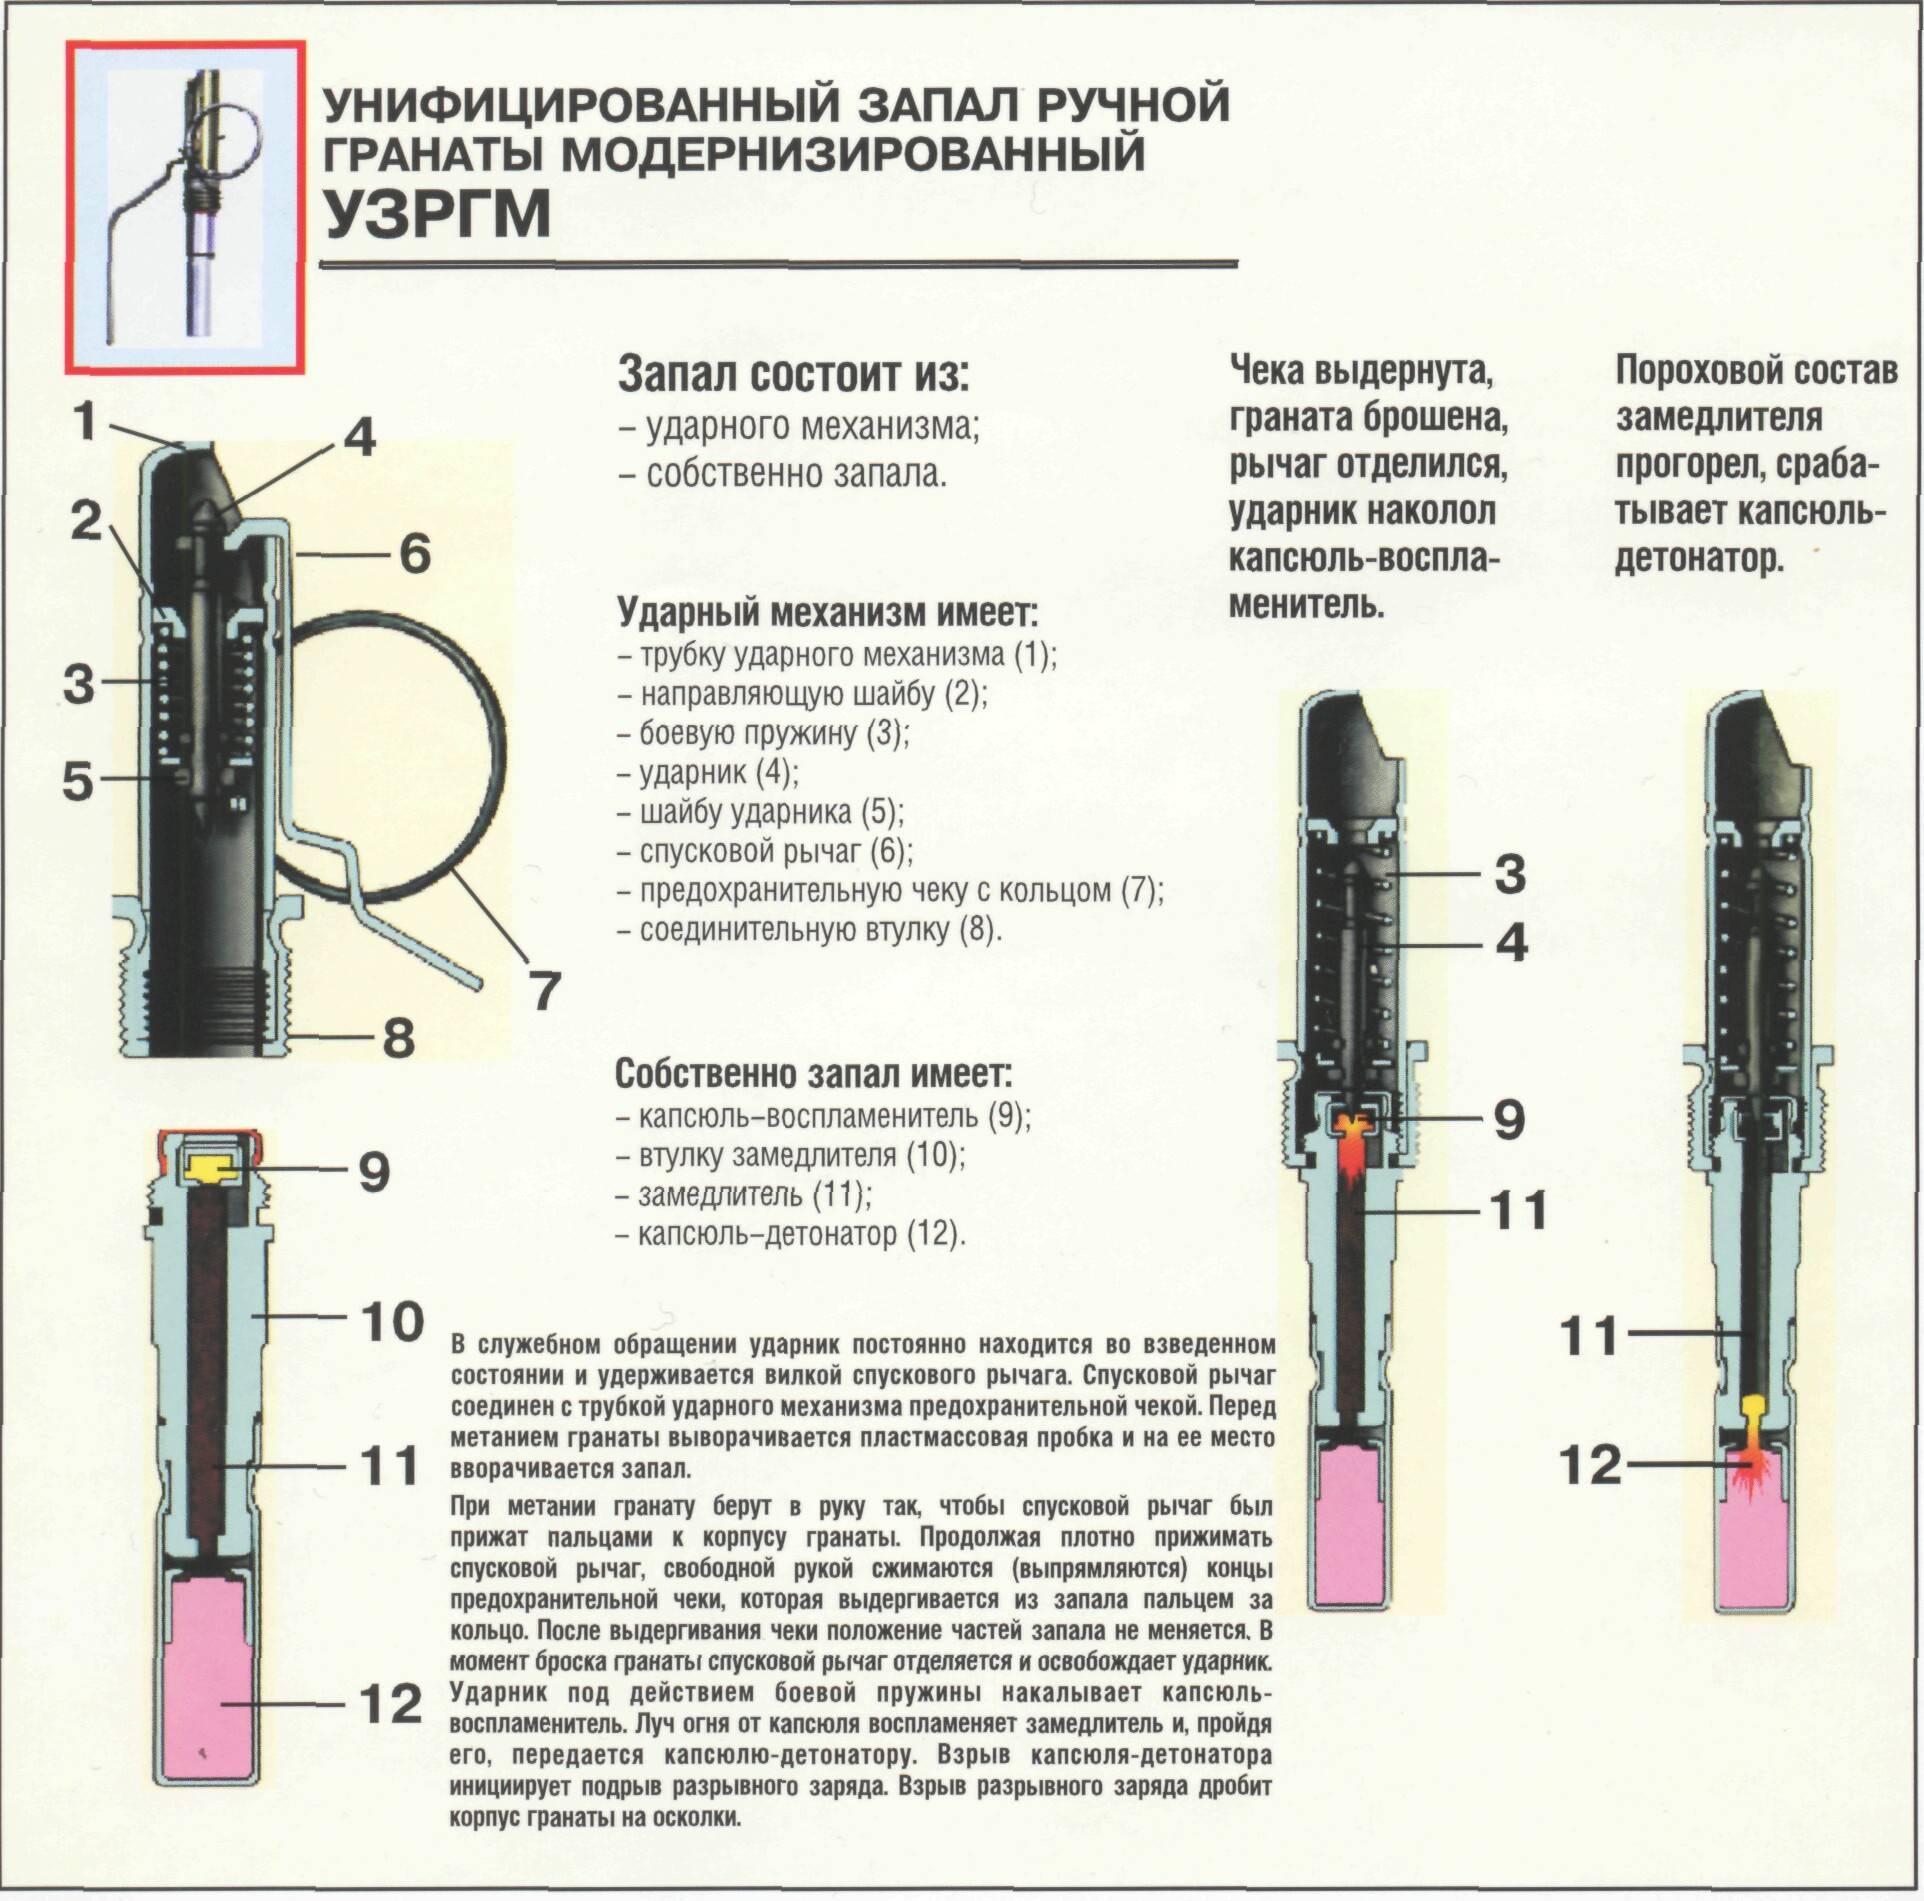 Ручная противотанковая граната рпг-43